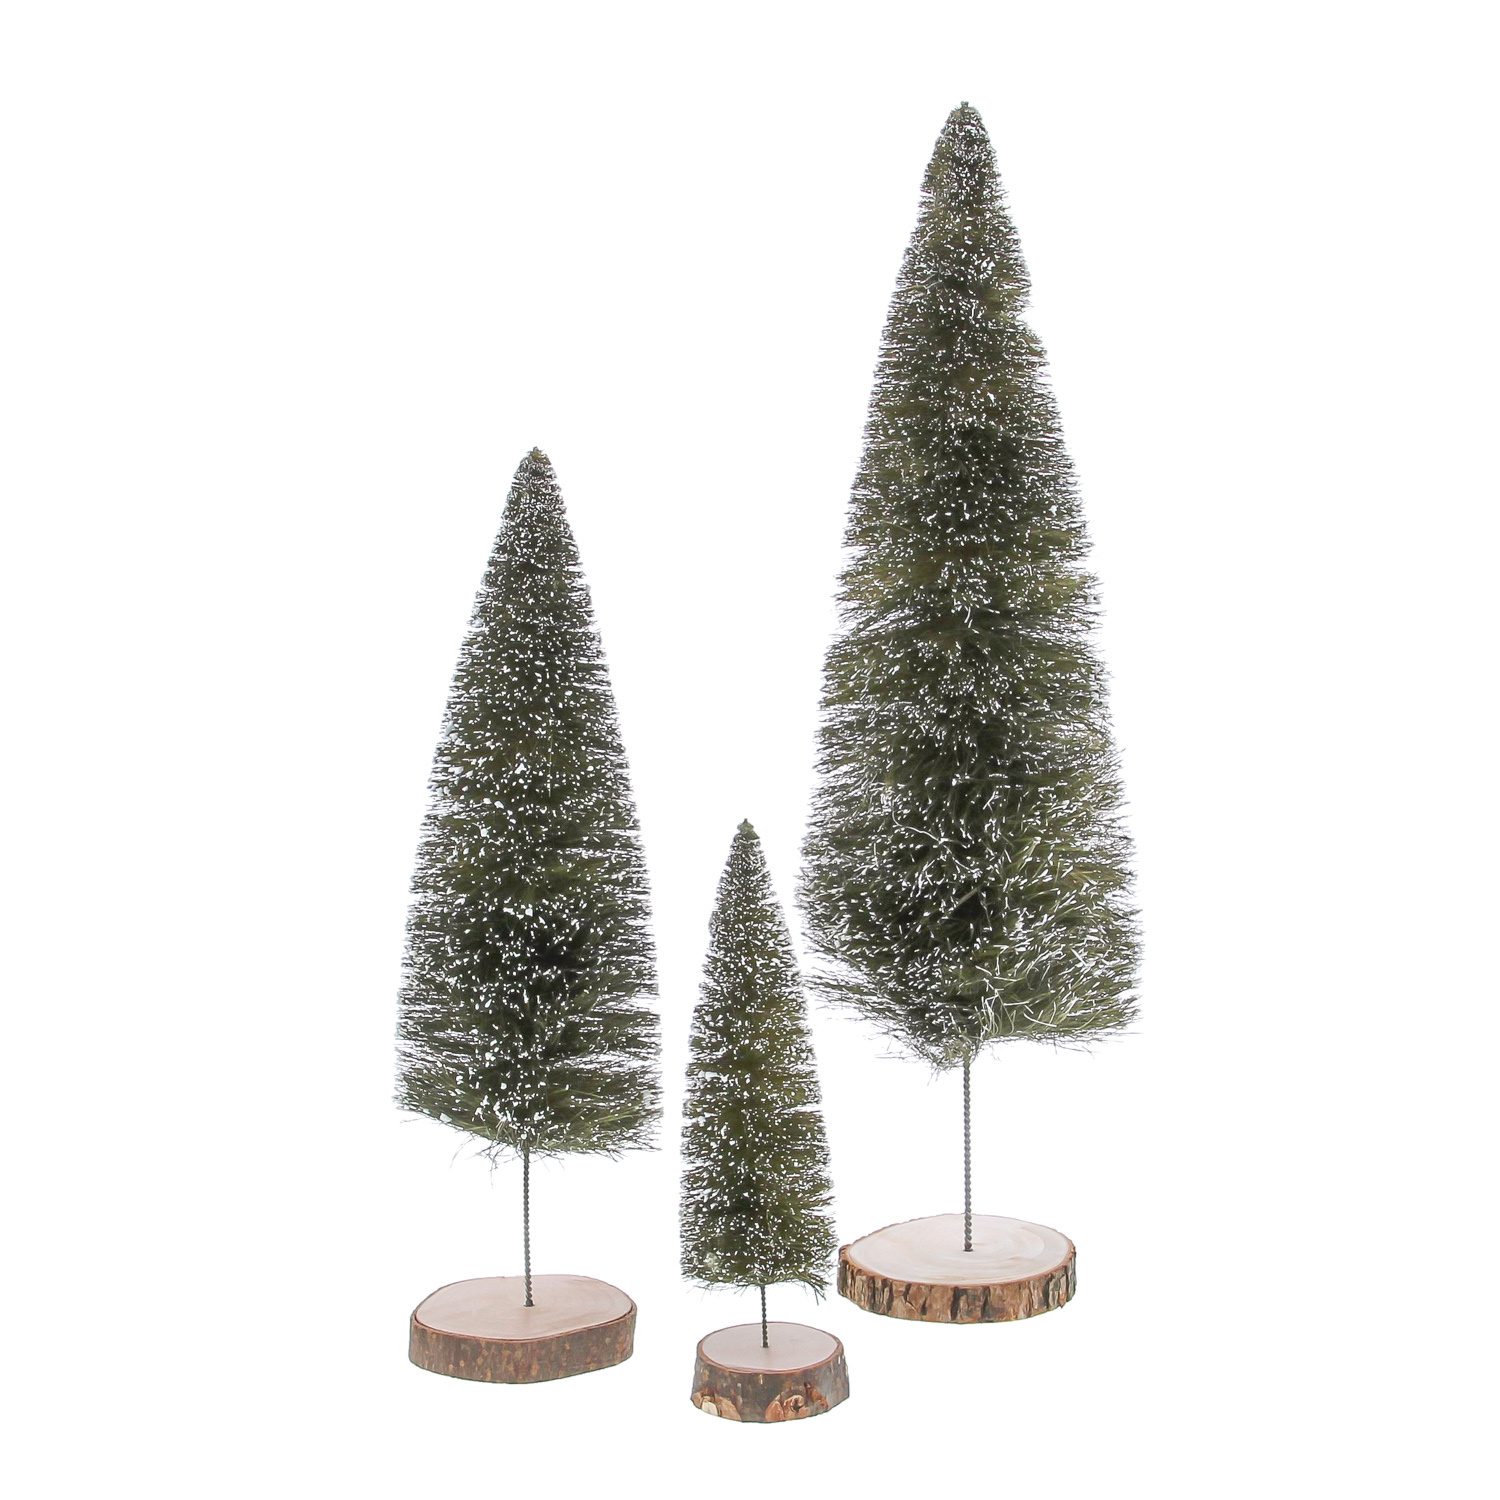 Weihnachtsbäume "Bürste" grün verschneit - 165*165*580 mm - 1 Satz à 3 Stück